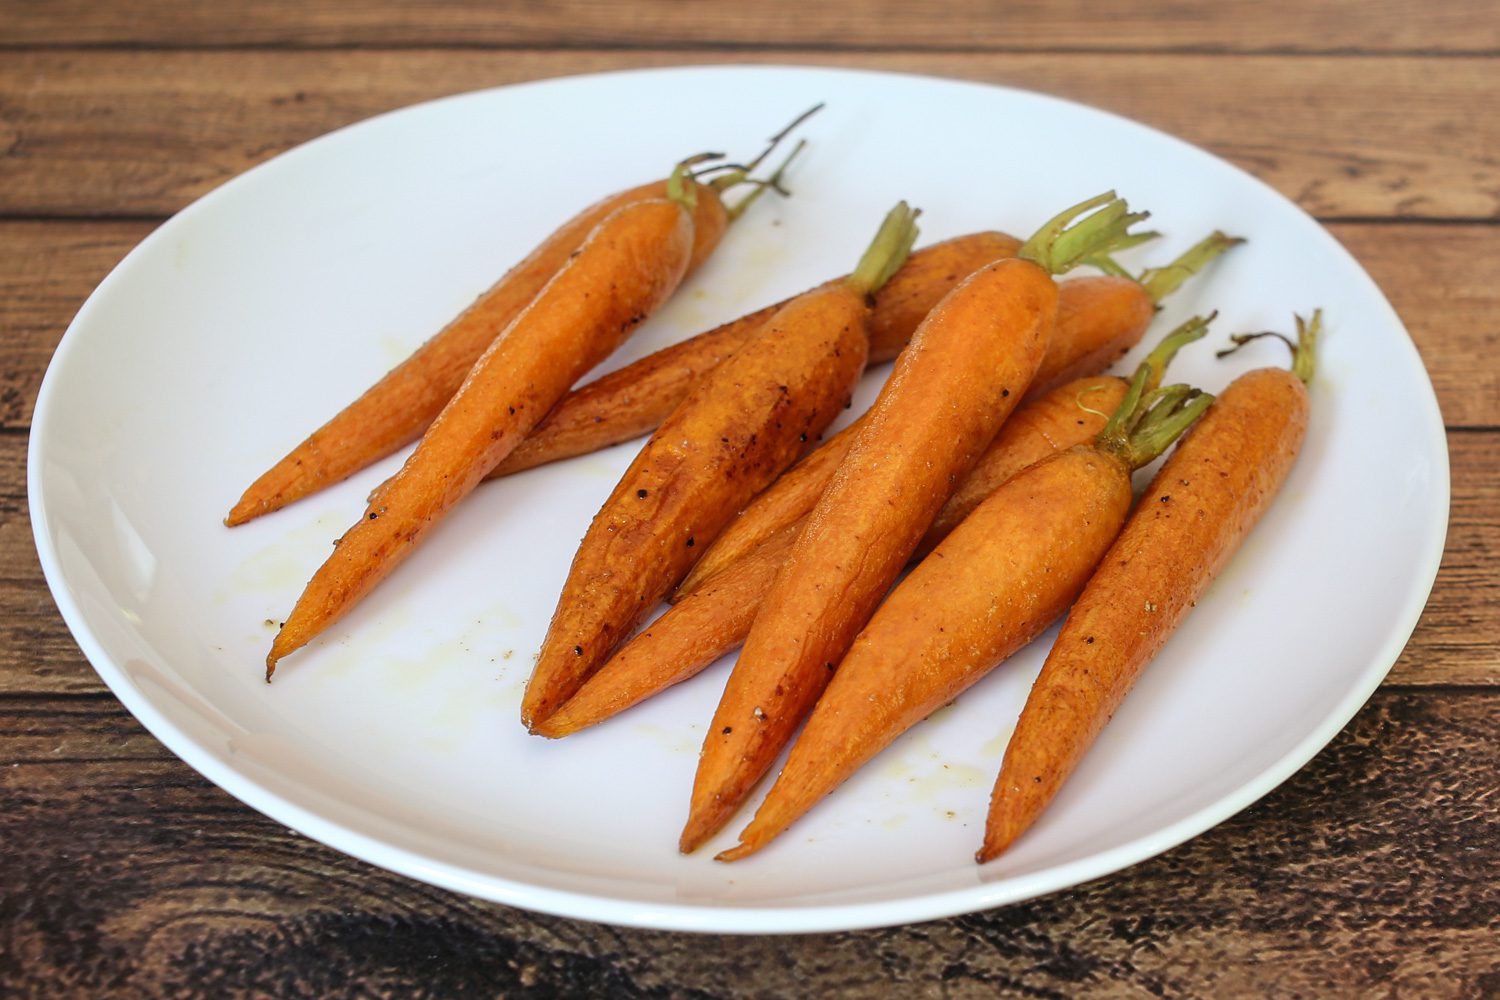 glazed carrots on a plate